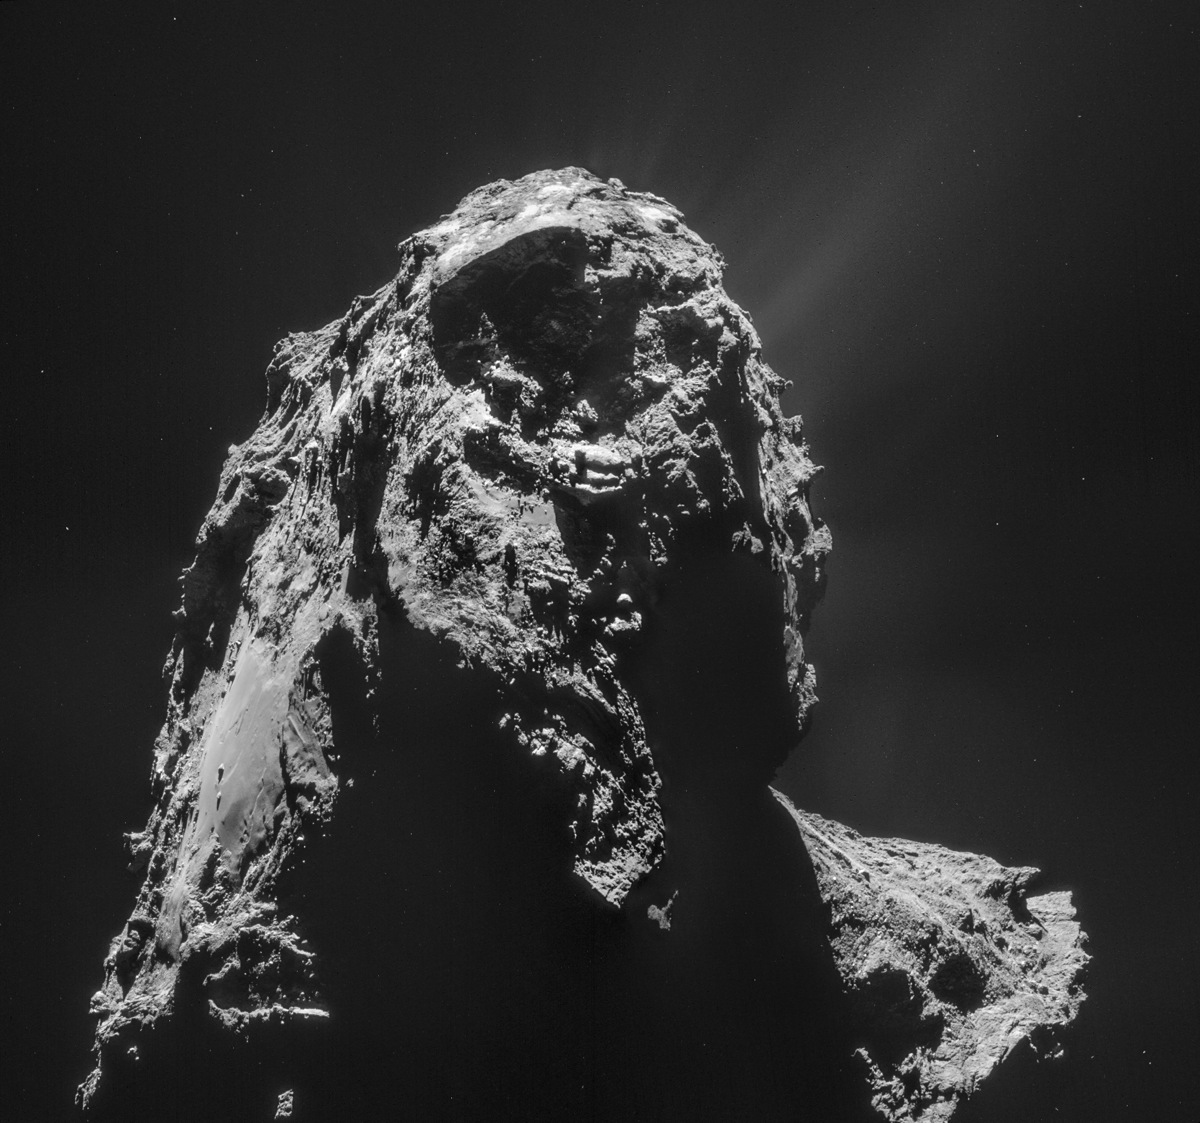 Близкий взгляд на комету Чурюмова-Герасименко в 2015